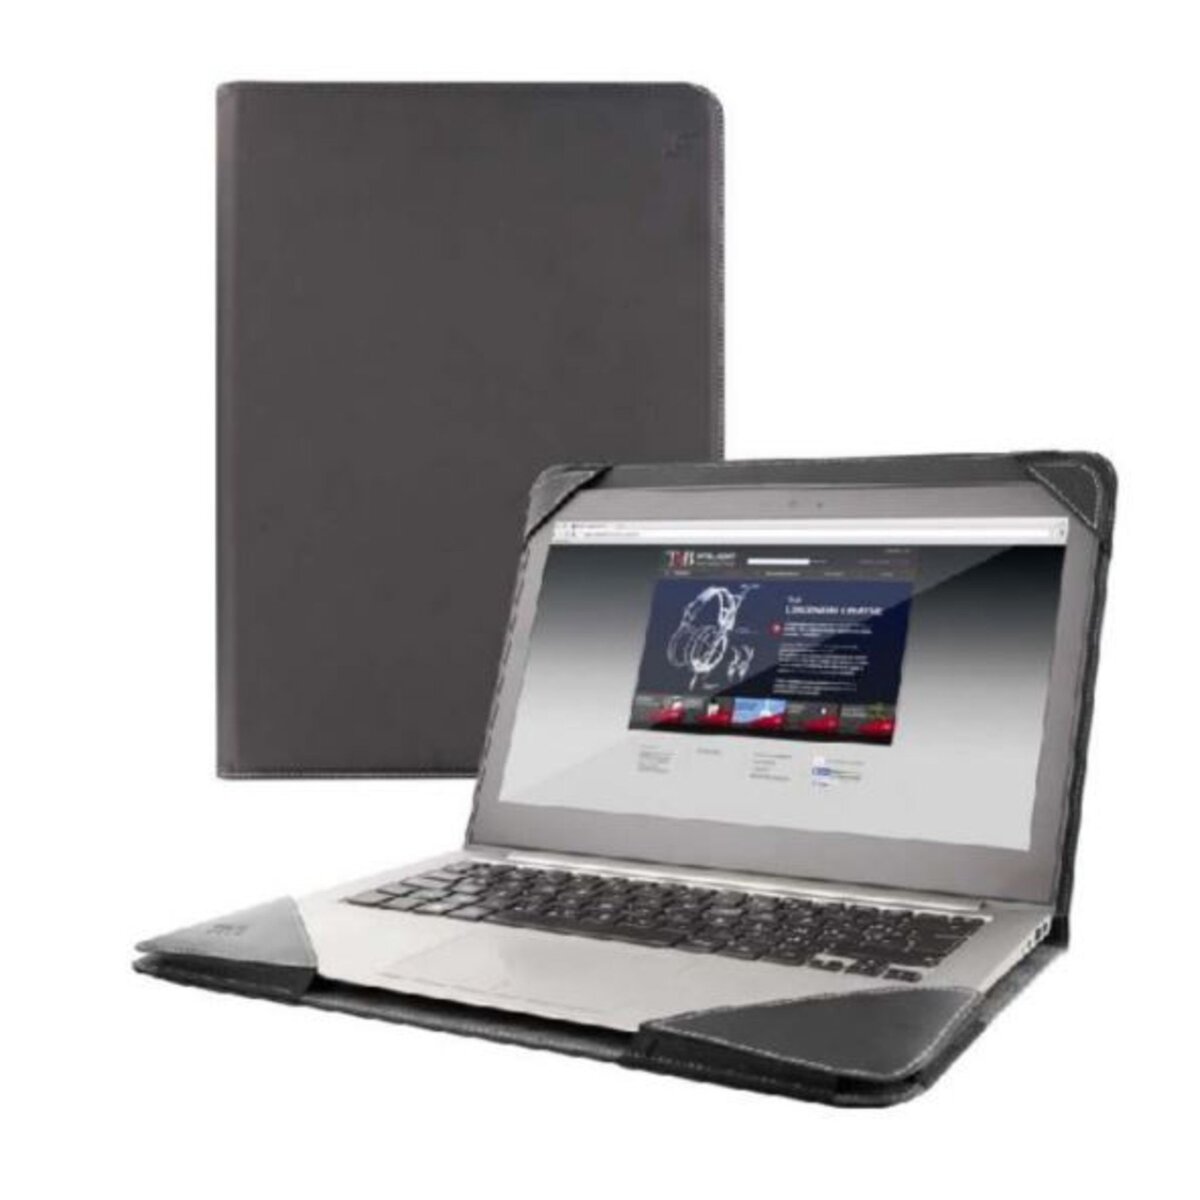 TNB Protection universelle - Ultrabook 13.3 - Noir